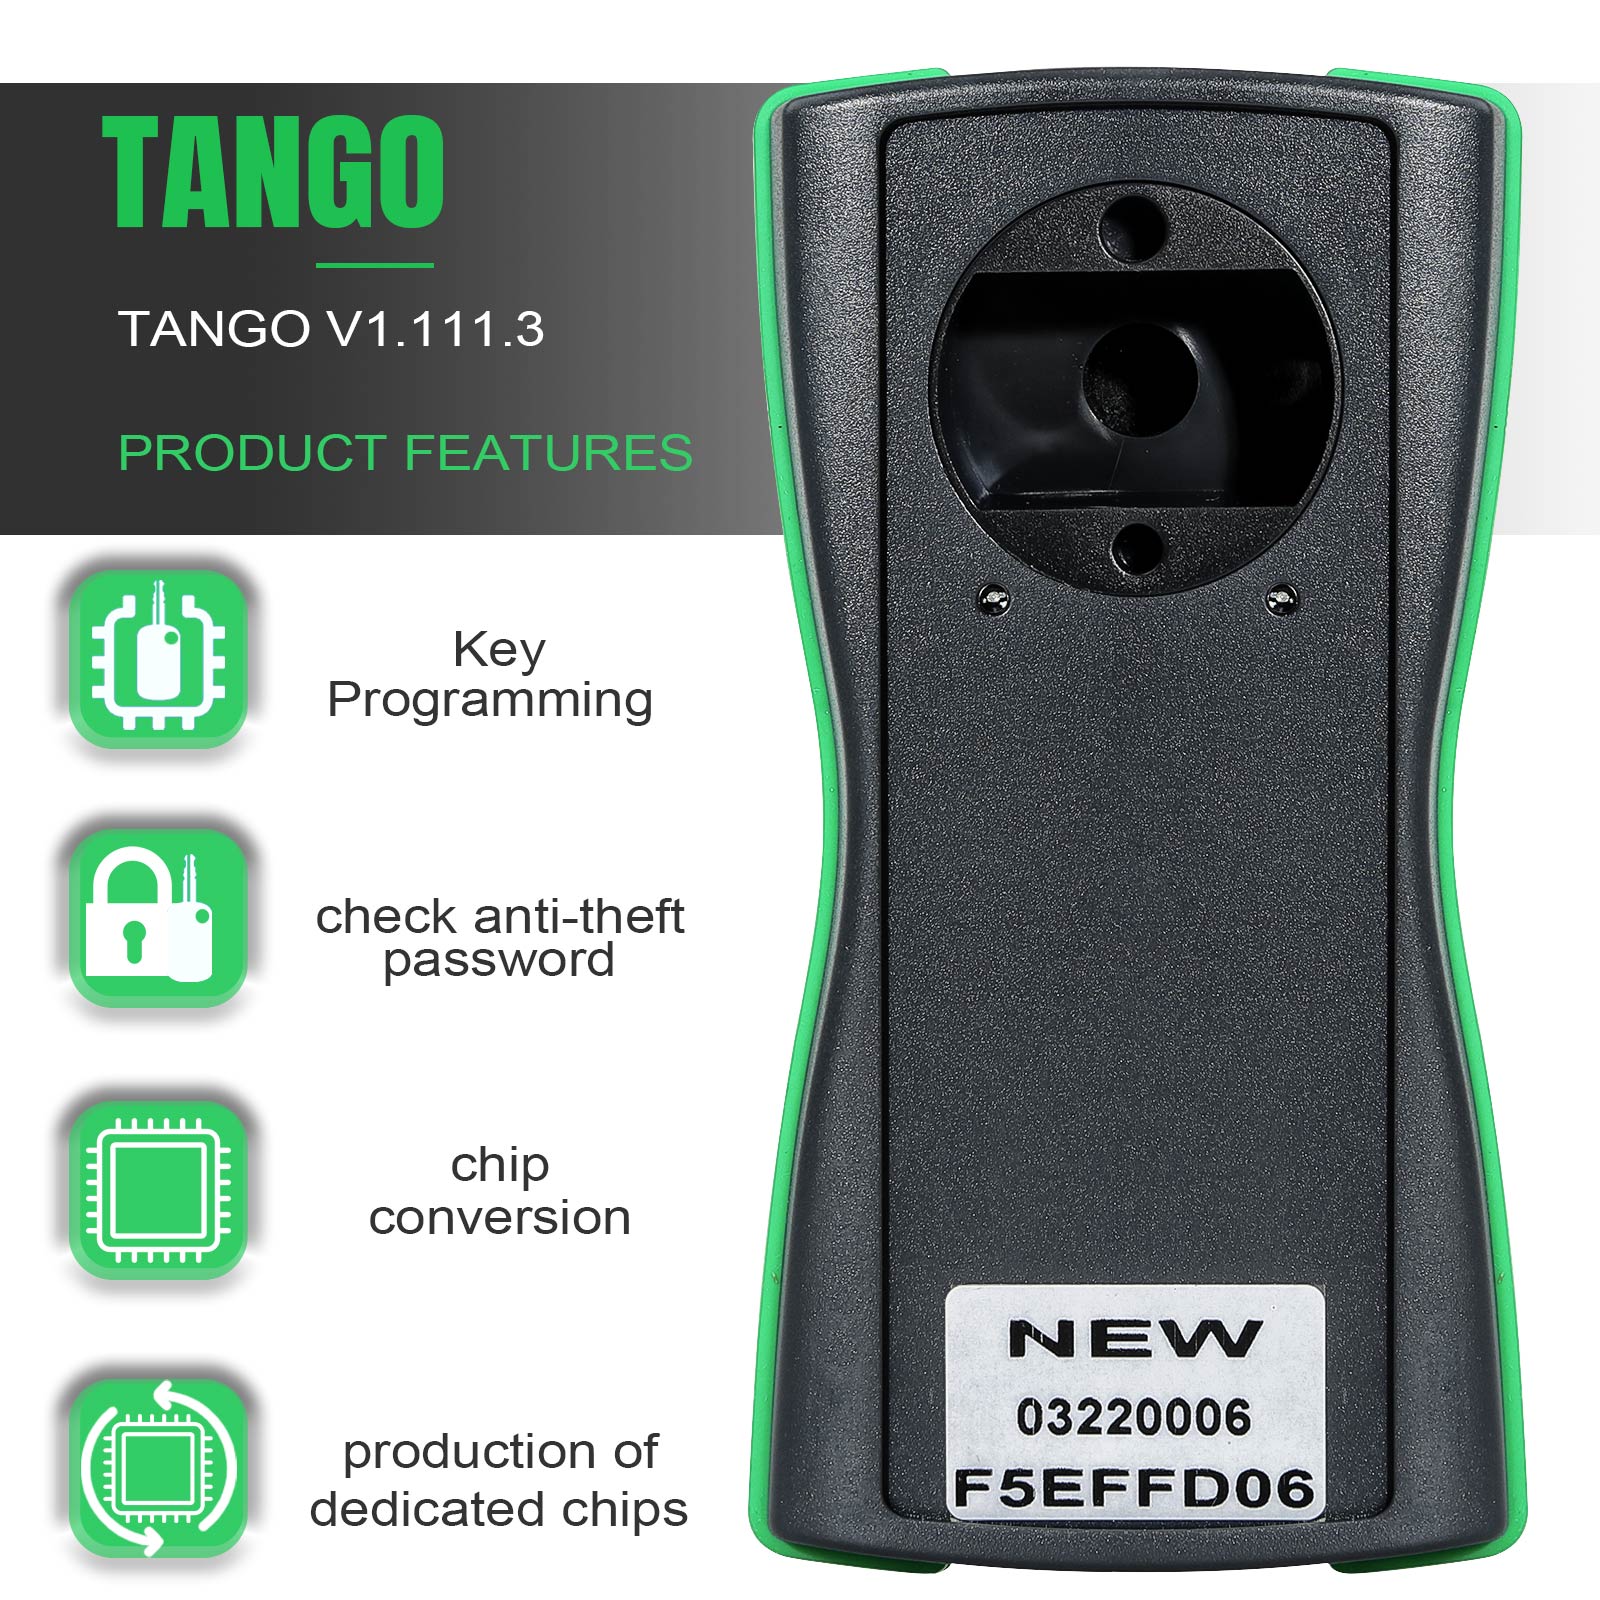 OEM FLY Tango Key Programmer functions